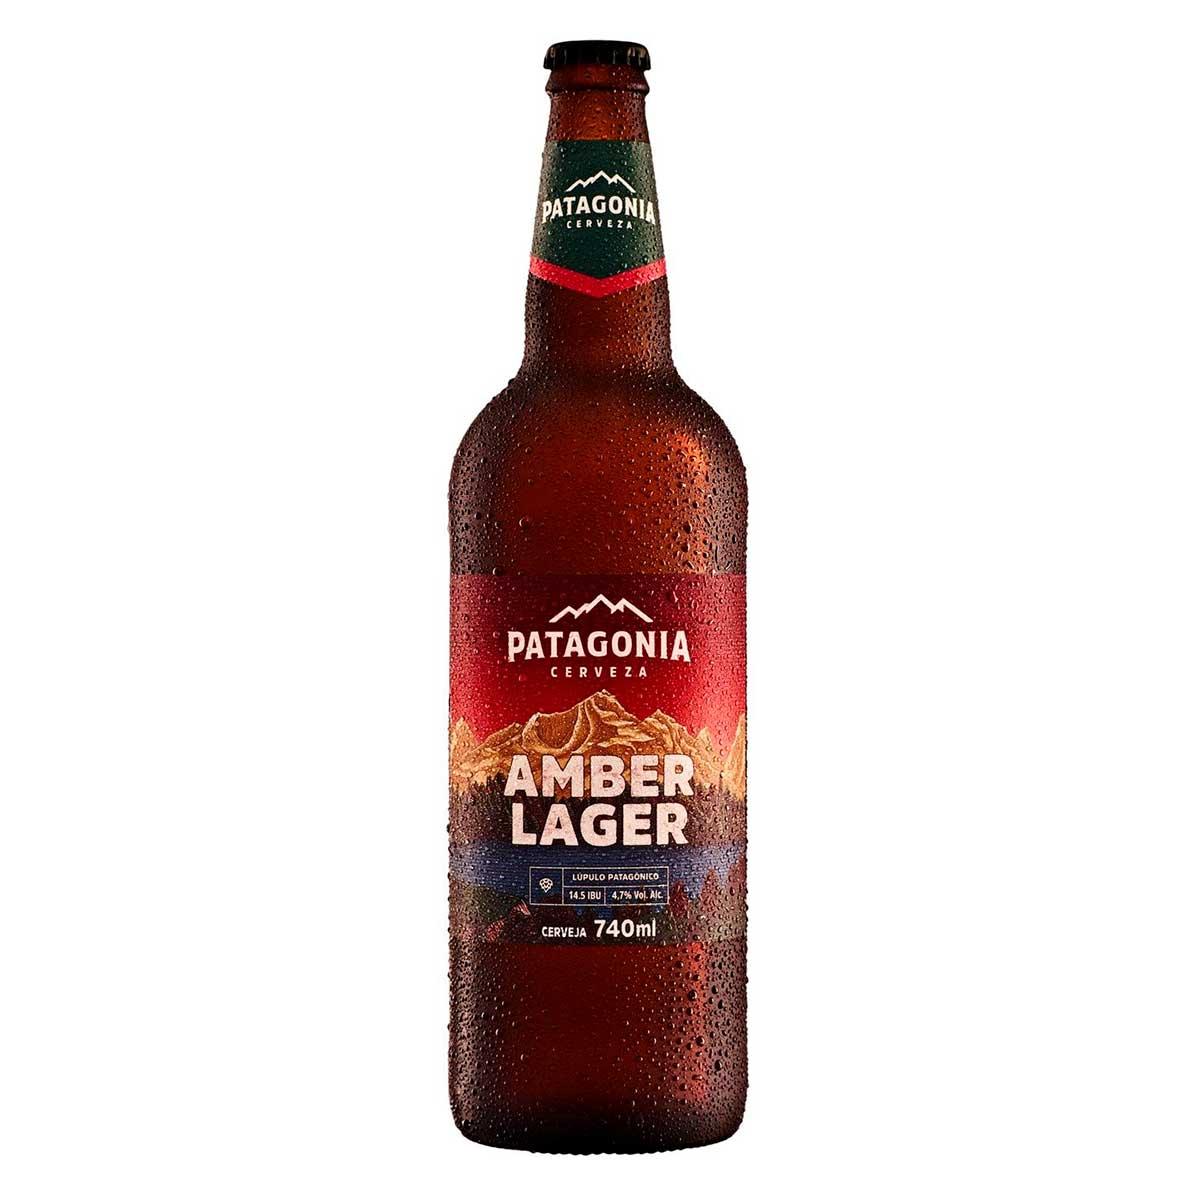 (Regional) Cerveja Patagonia Amber Lager 740ml Garrafa